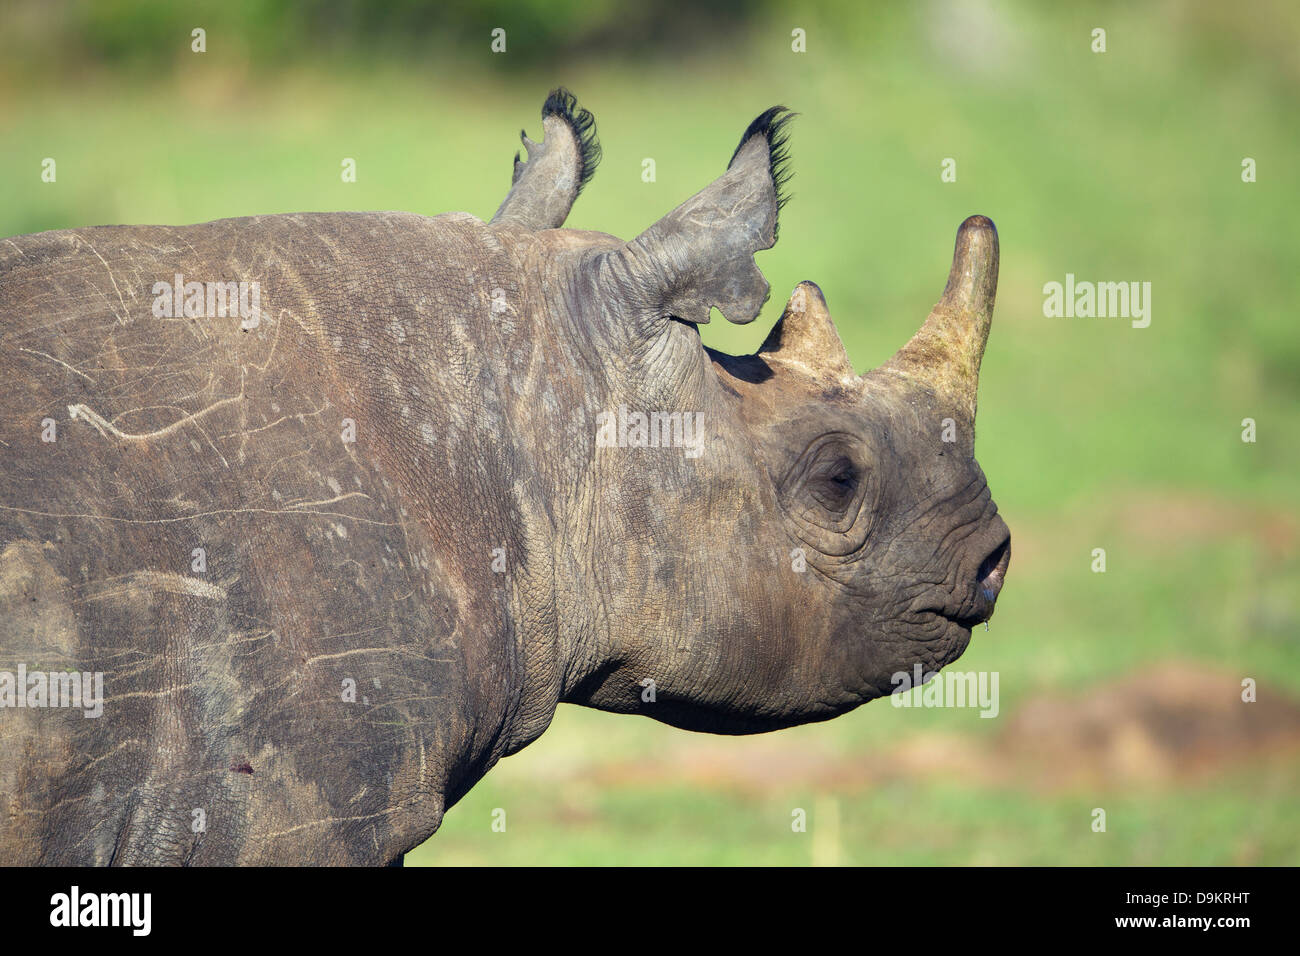 Rhinoceros calf close up portrait, Masai Mara, Kenya Stock Photo